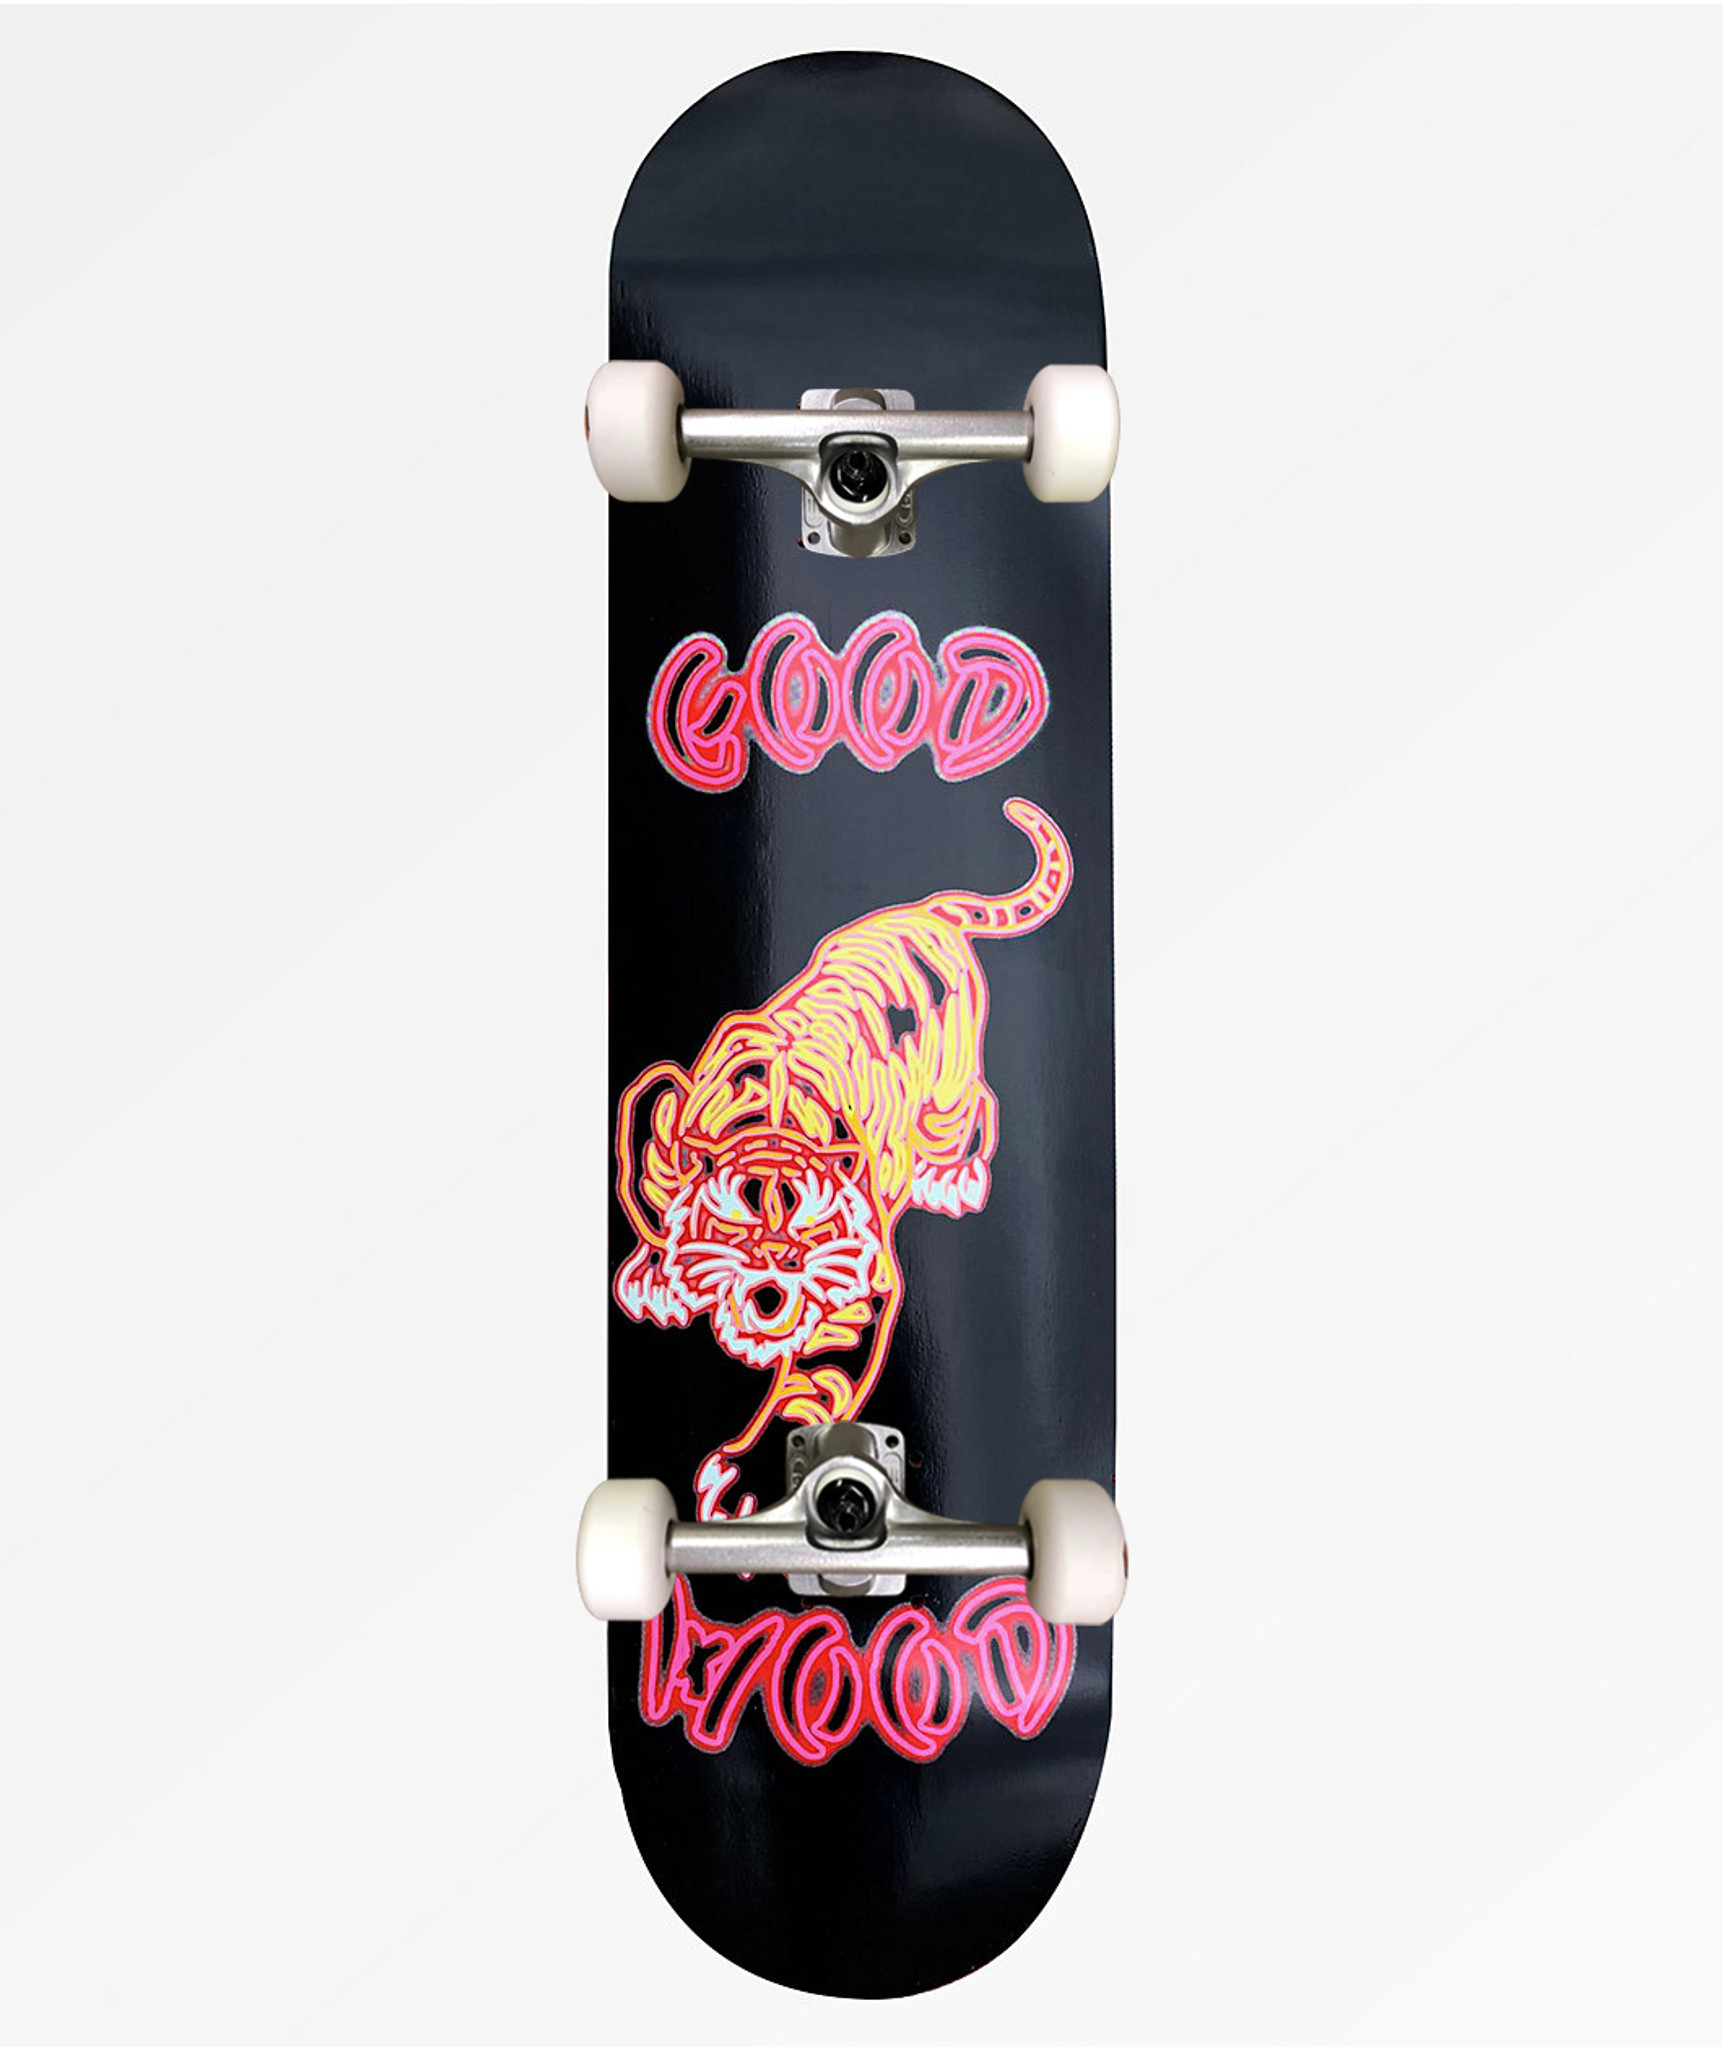 Goodwood Neon Tiger Complete Skateboard 8.0" x 31.75"